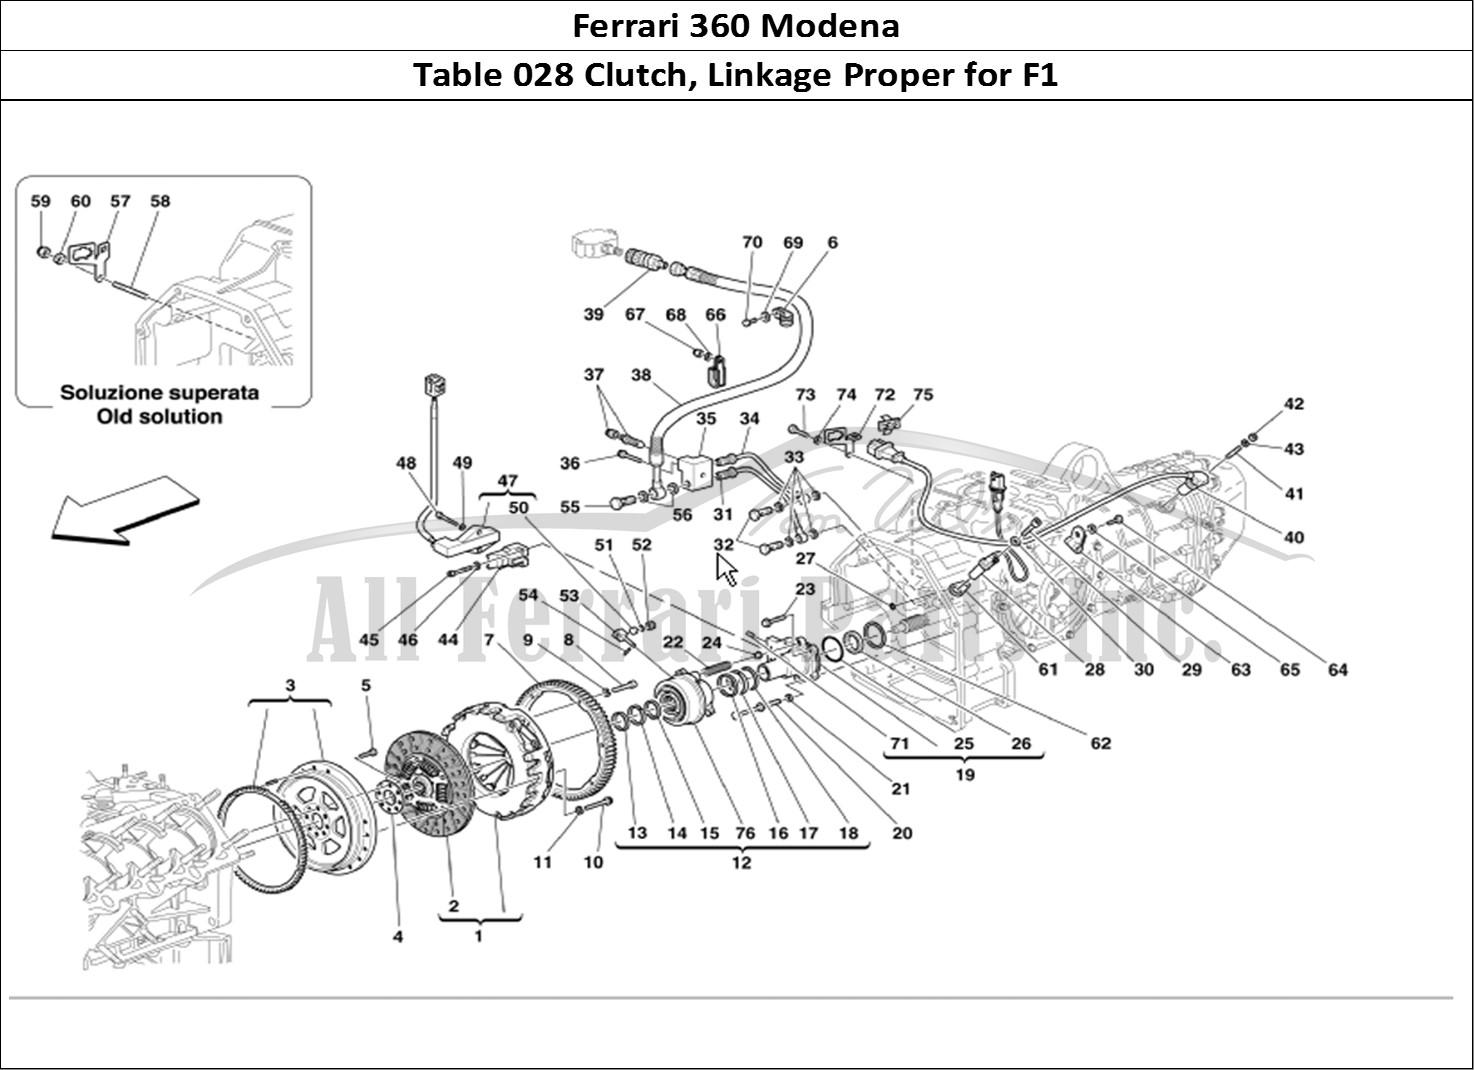 Ferrari Parts Ferrari 360 Modena Page 028 Clutch and Controls -Vali